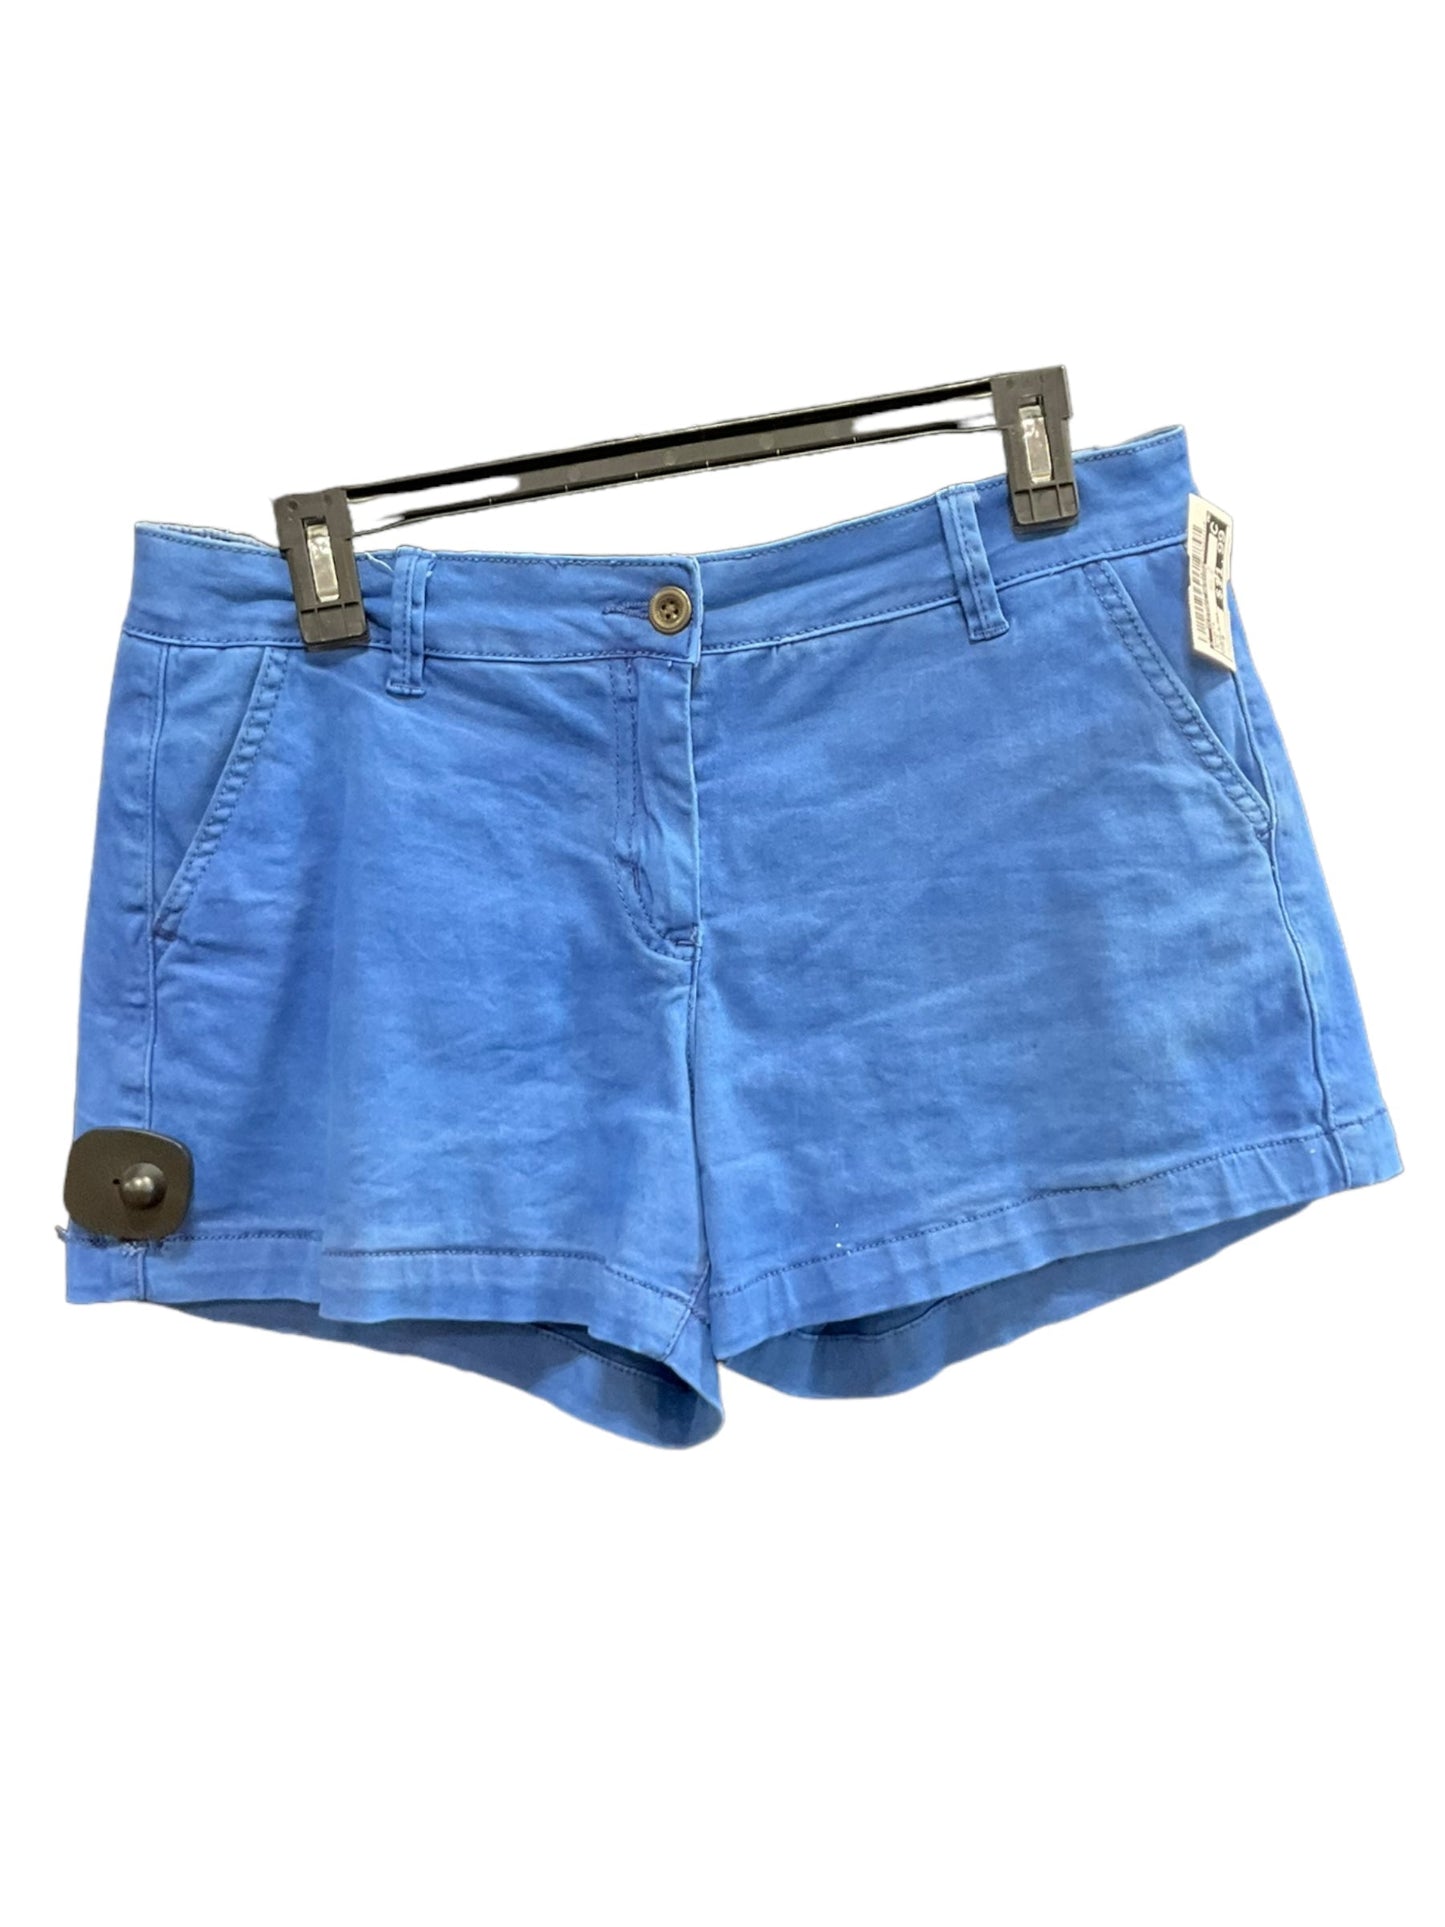 Blue Shorts Clothes Mentor, Size 8